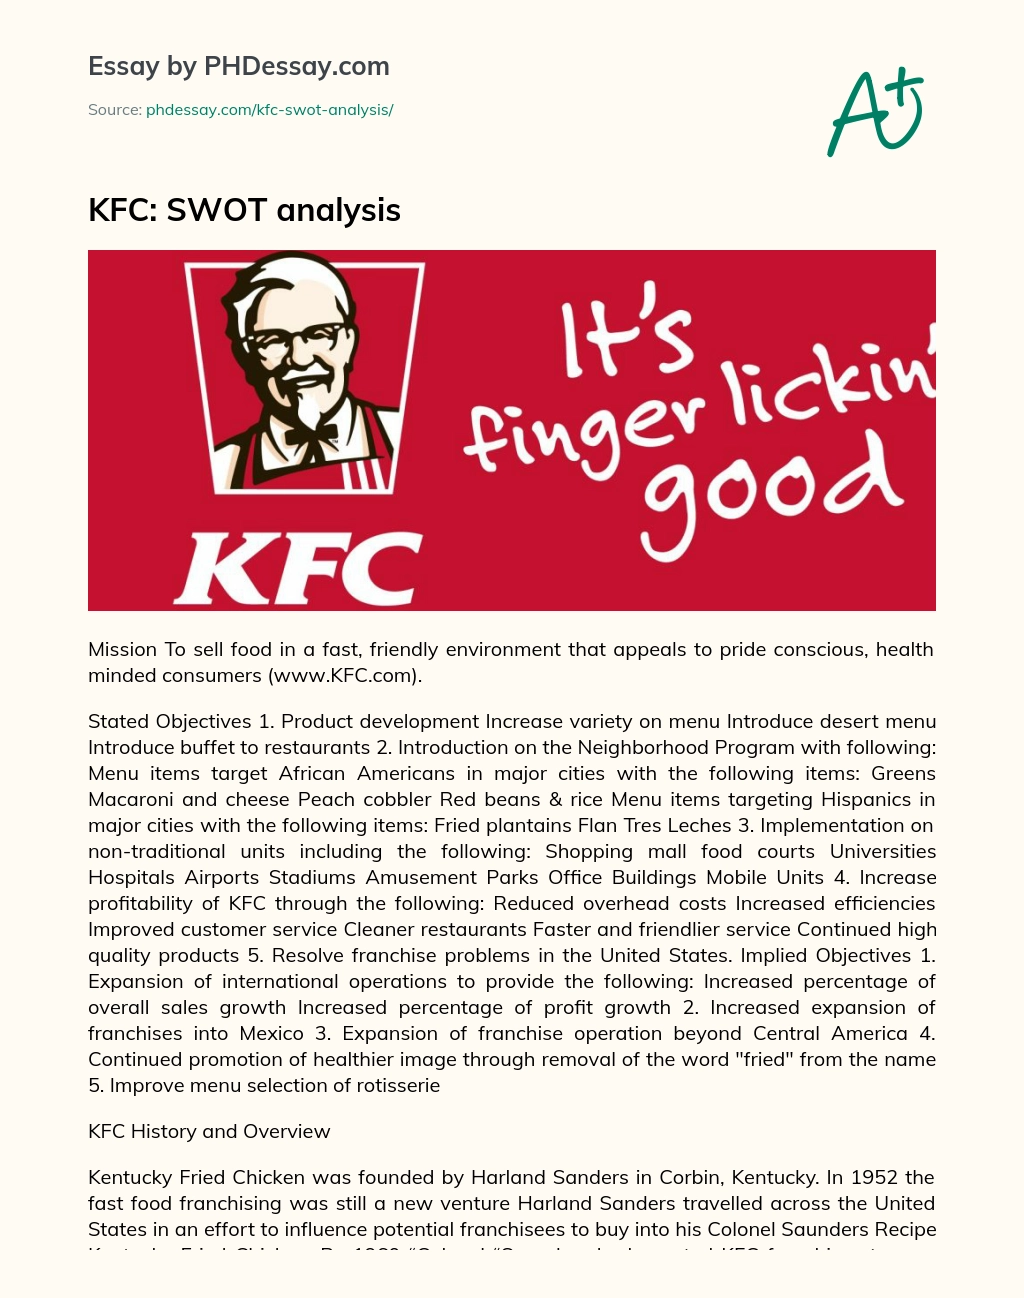 KFC: SWOT analysis essay